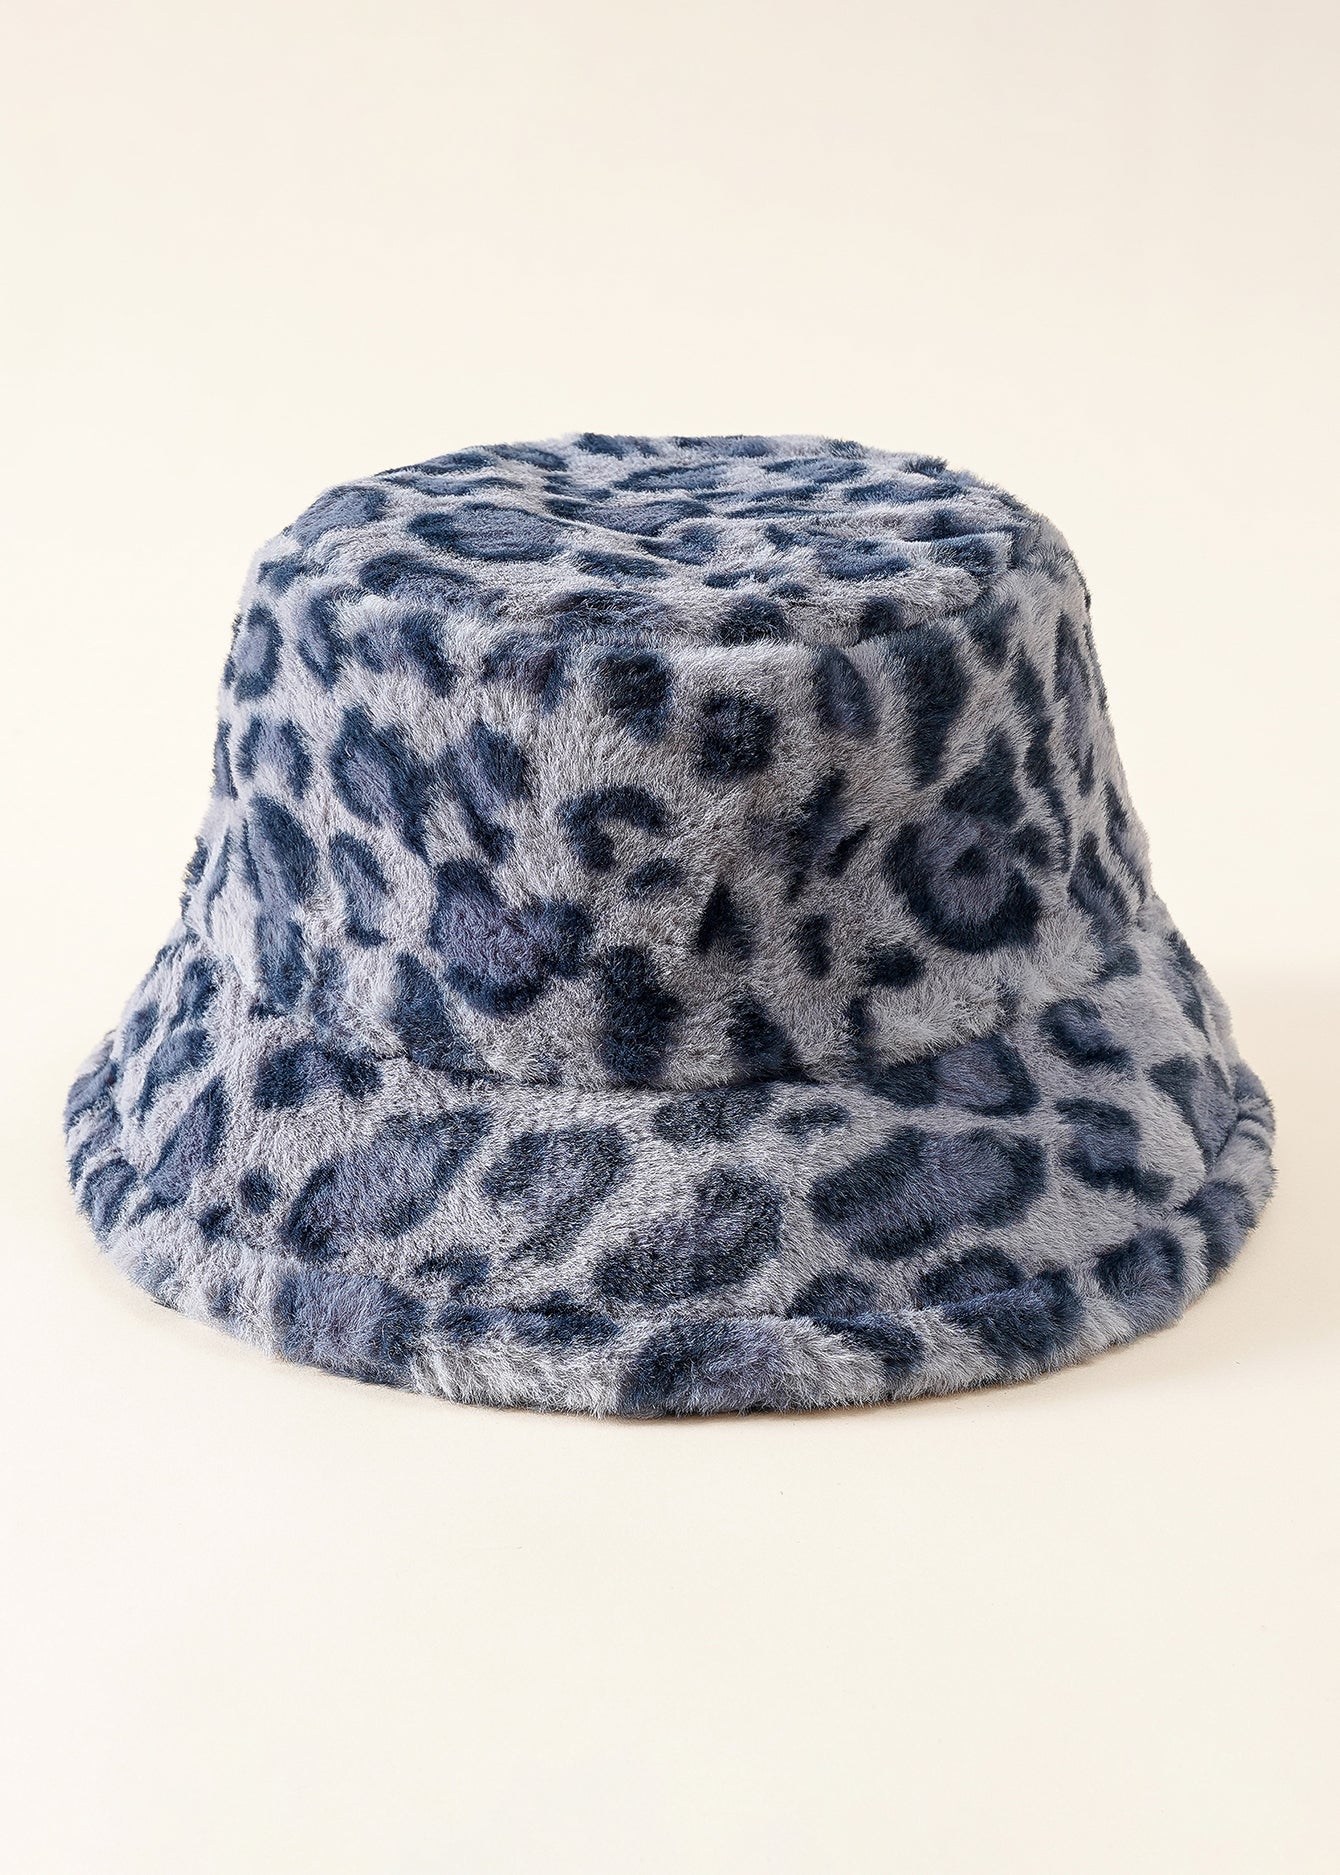 Leopard Print Bucket Hat Sai Feel